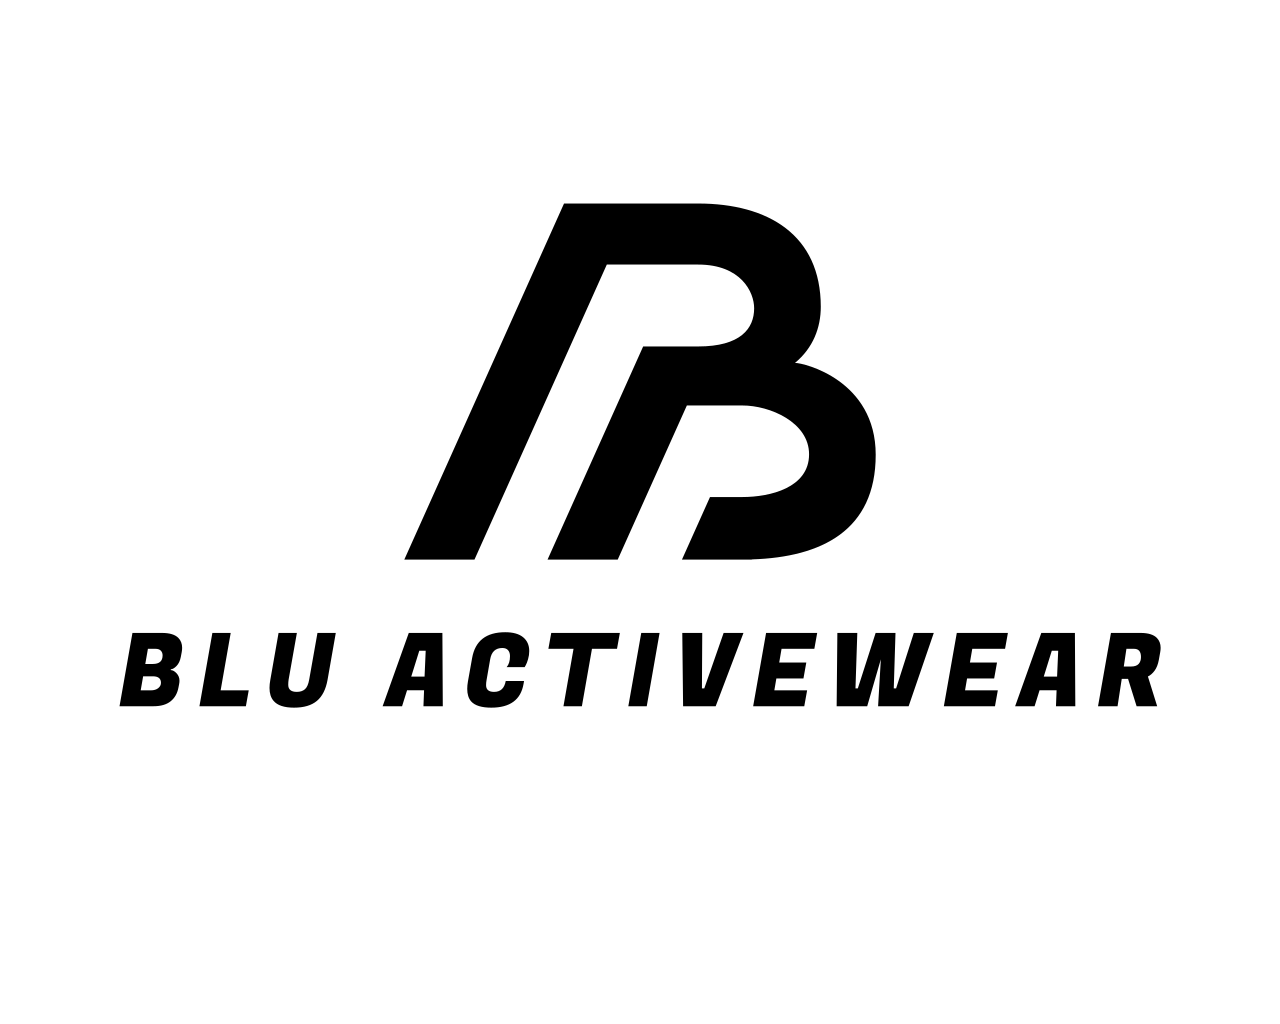 Blu Activewear